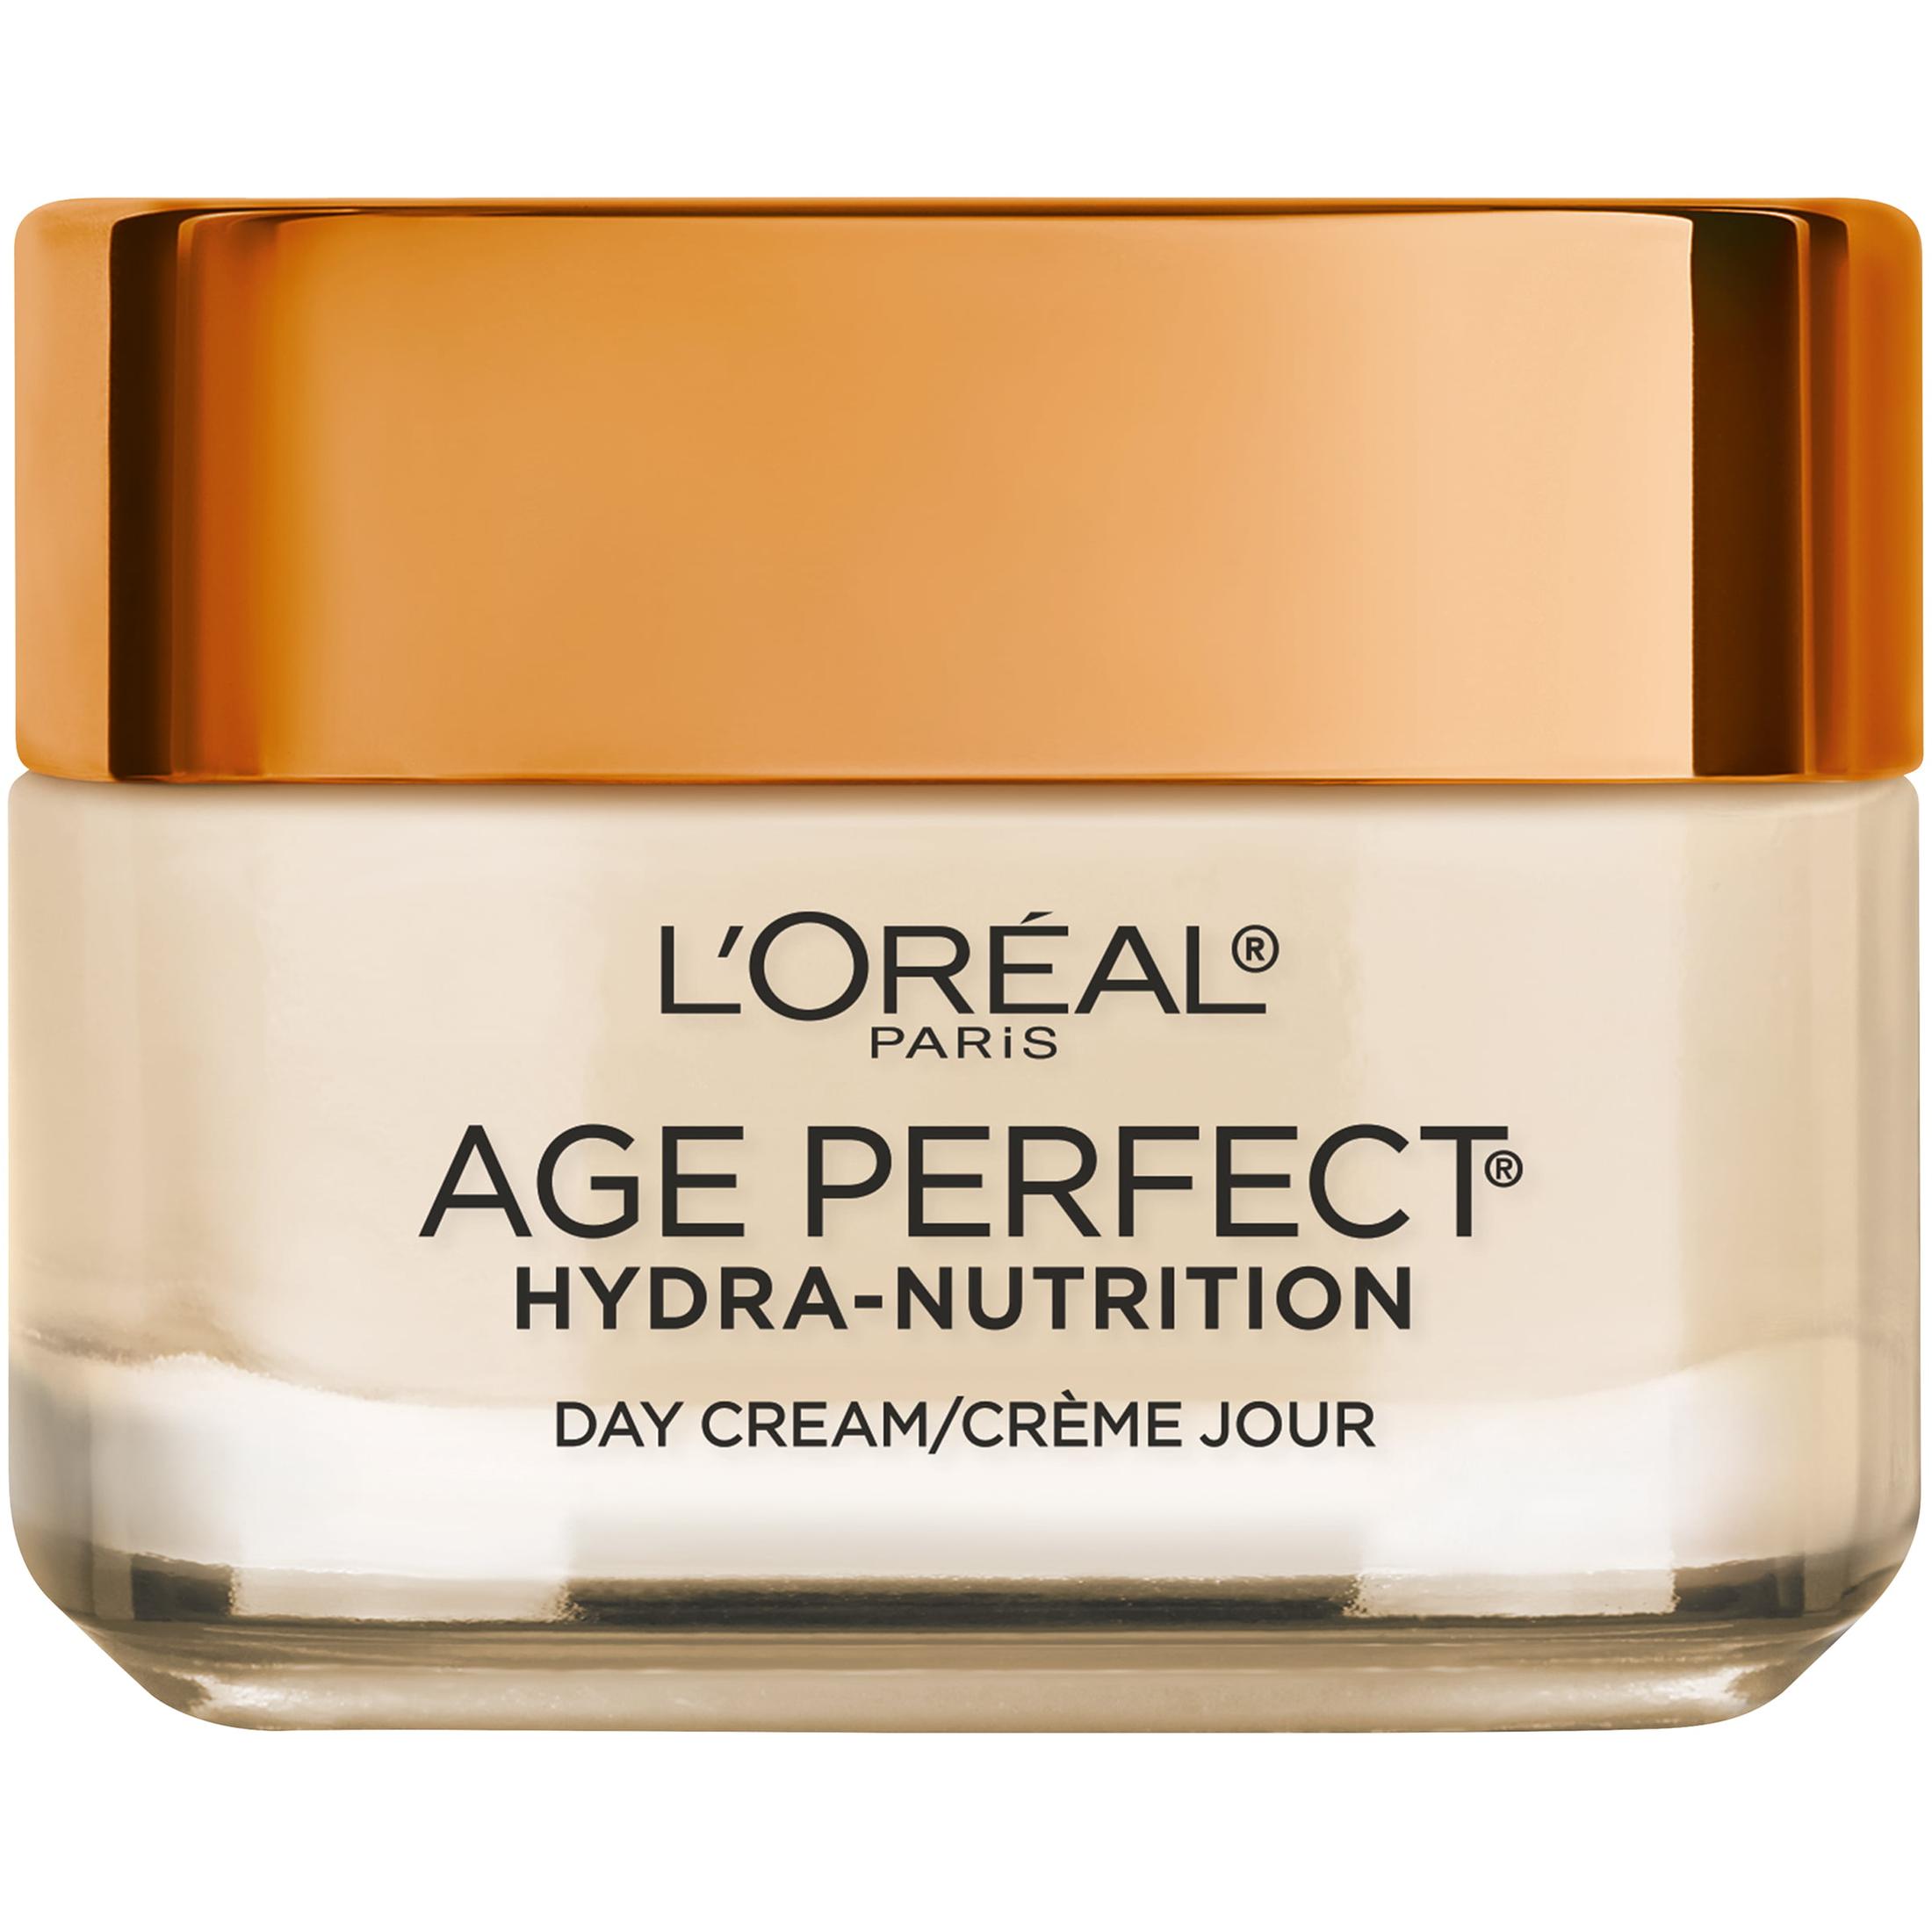 L'Oreal Paris Age Perfect Hydra Nutrition Honey Day Cream, 1.7 oz. - image 1 of 9